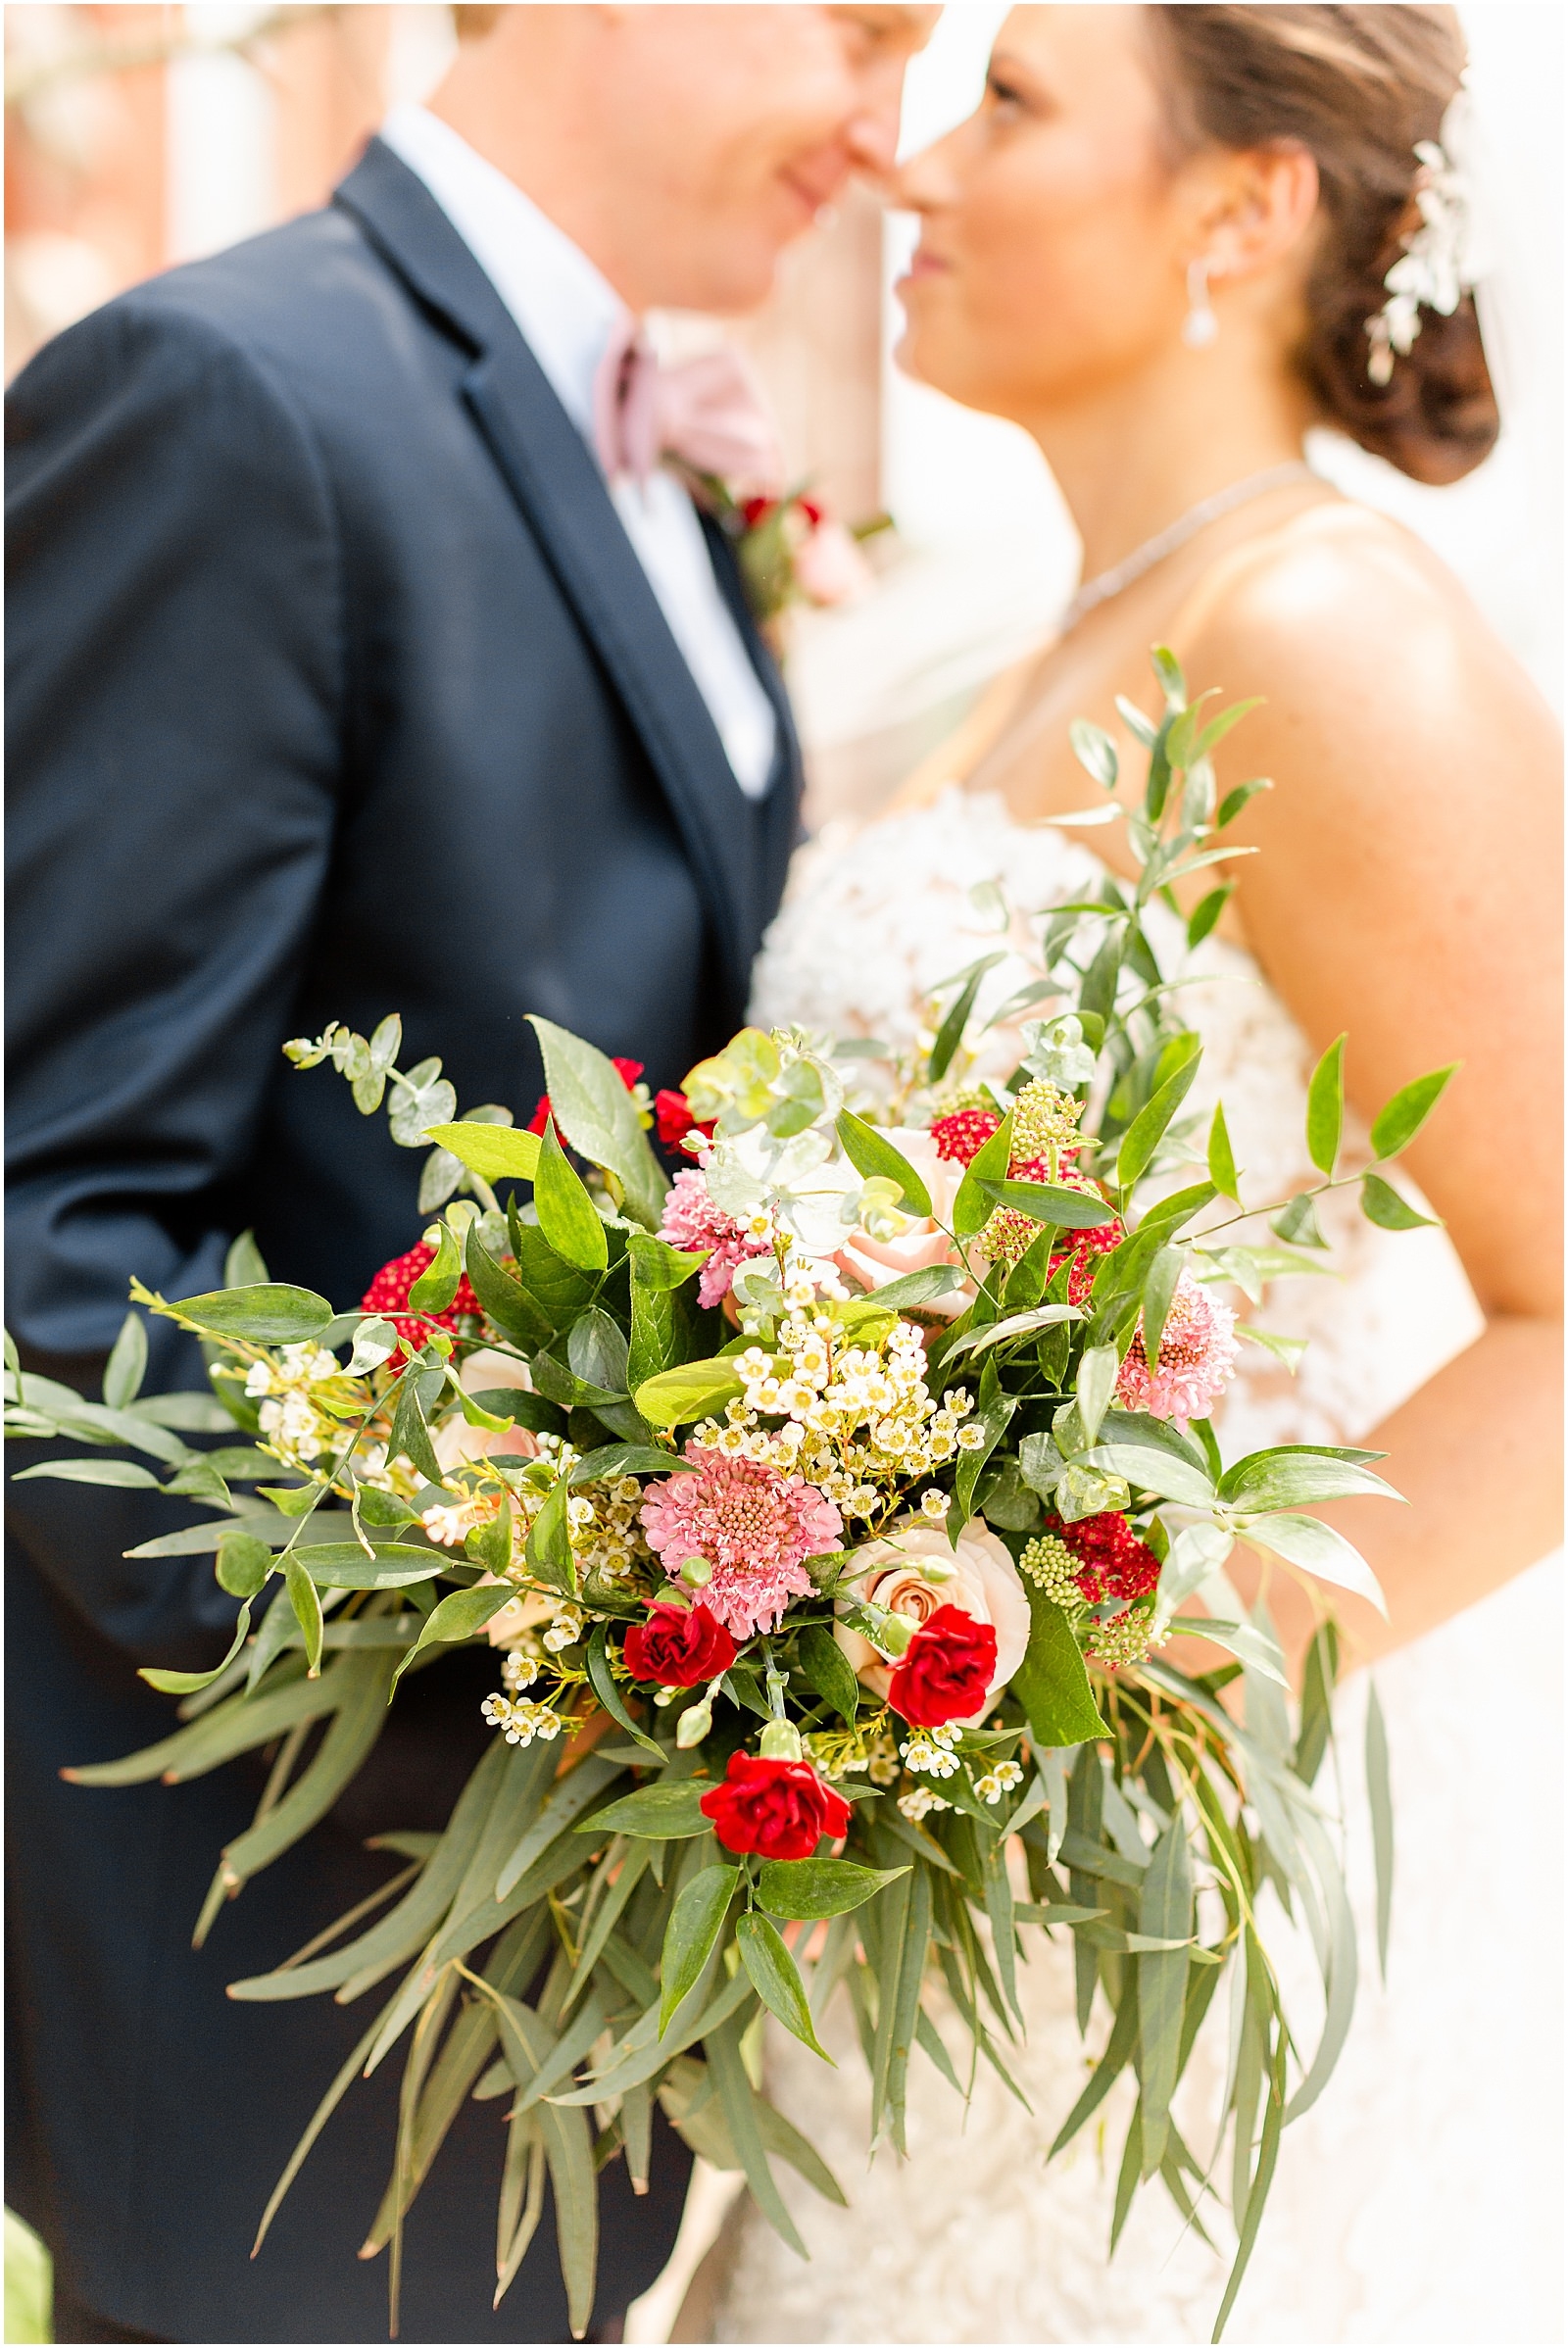 Deidra and Andrew | A Huntingburgh Indiana Wedding Bret and Brandie | Evansville Photographers | @bretandbrandie-0059.jpg